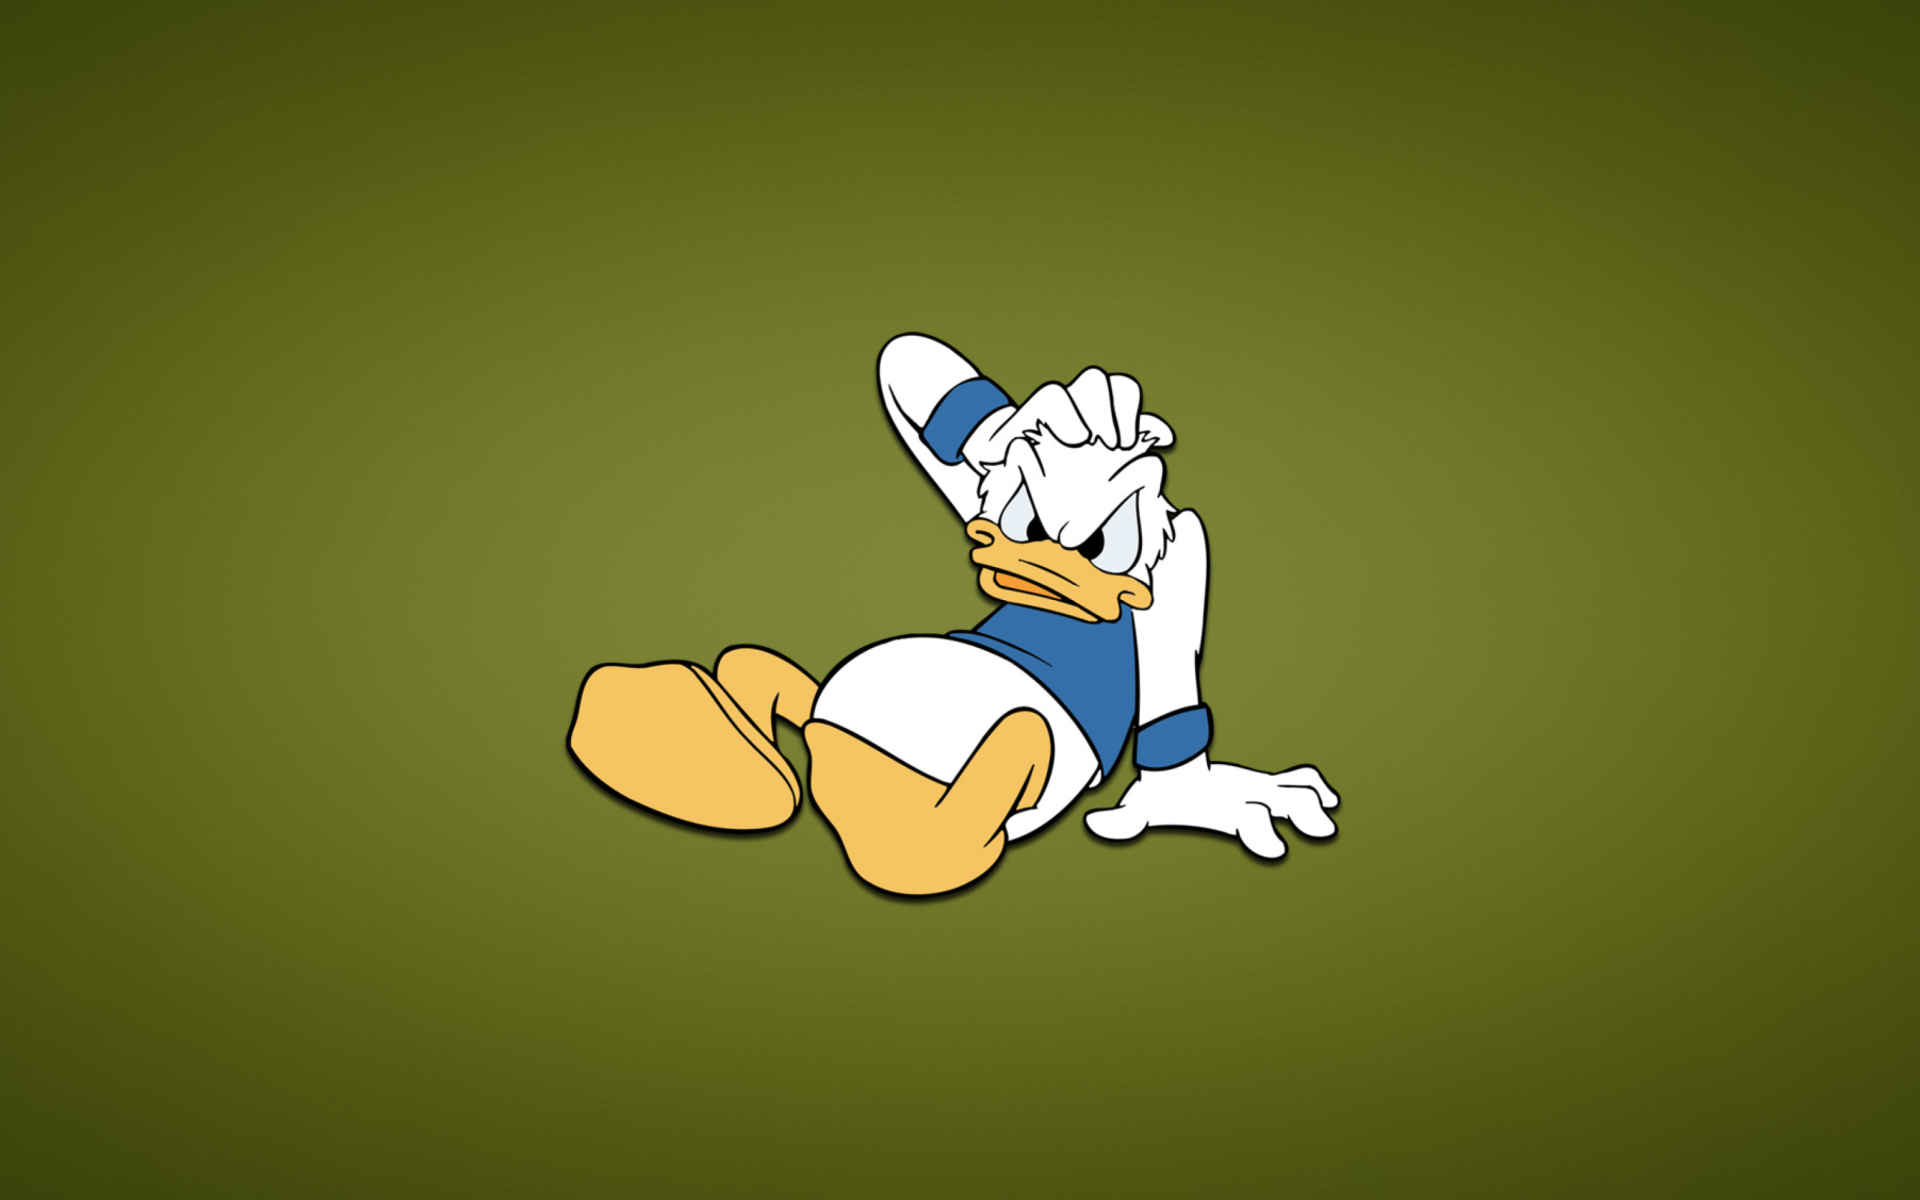 Funny Donald Duck Wallpaper For Widescreen Desktop Pc 1920x1080 Full Hd